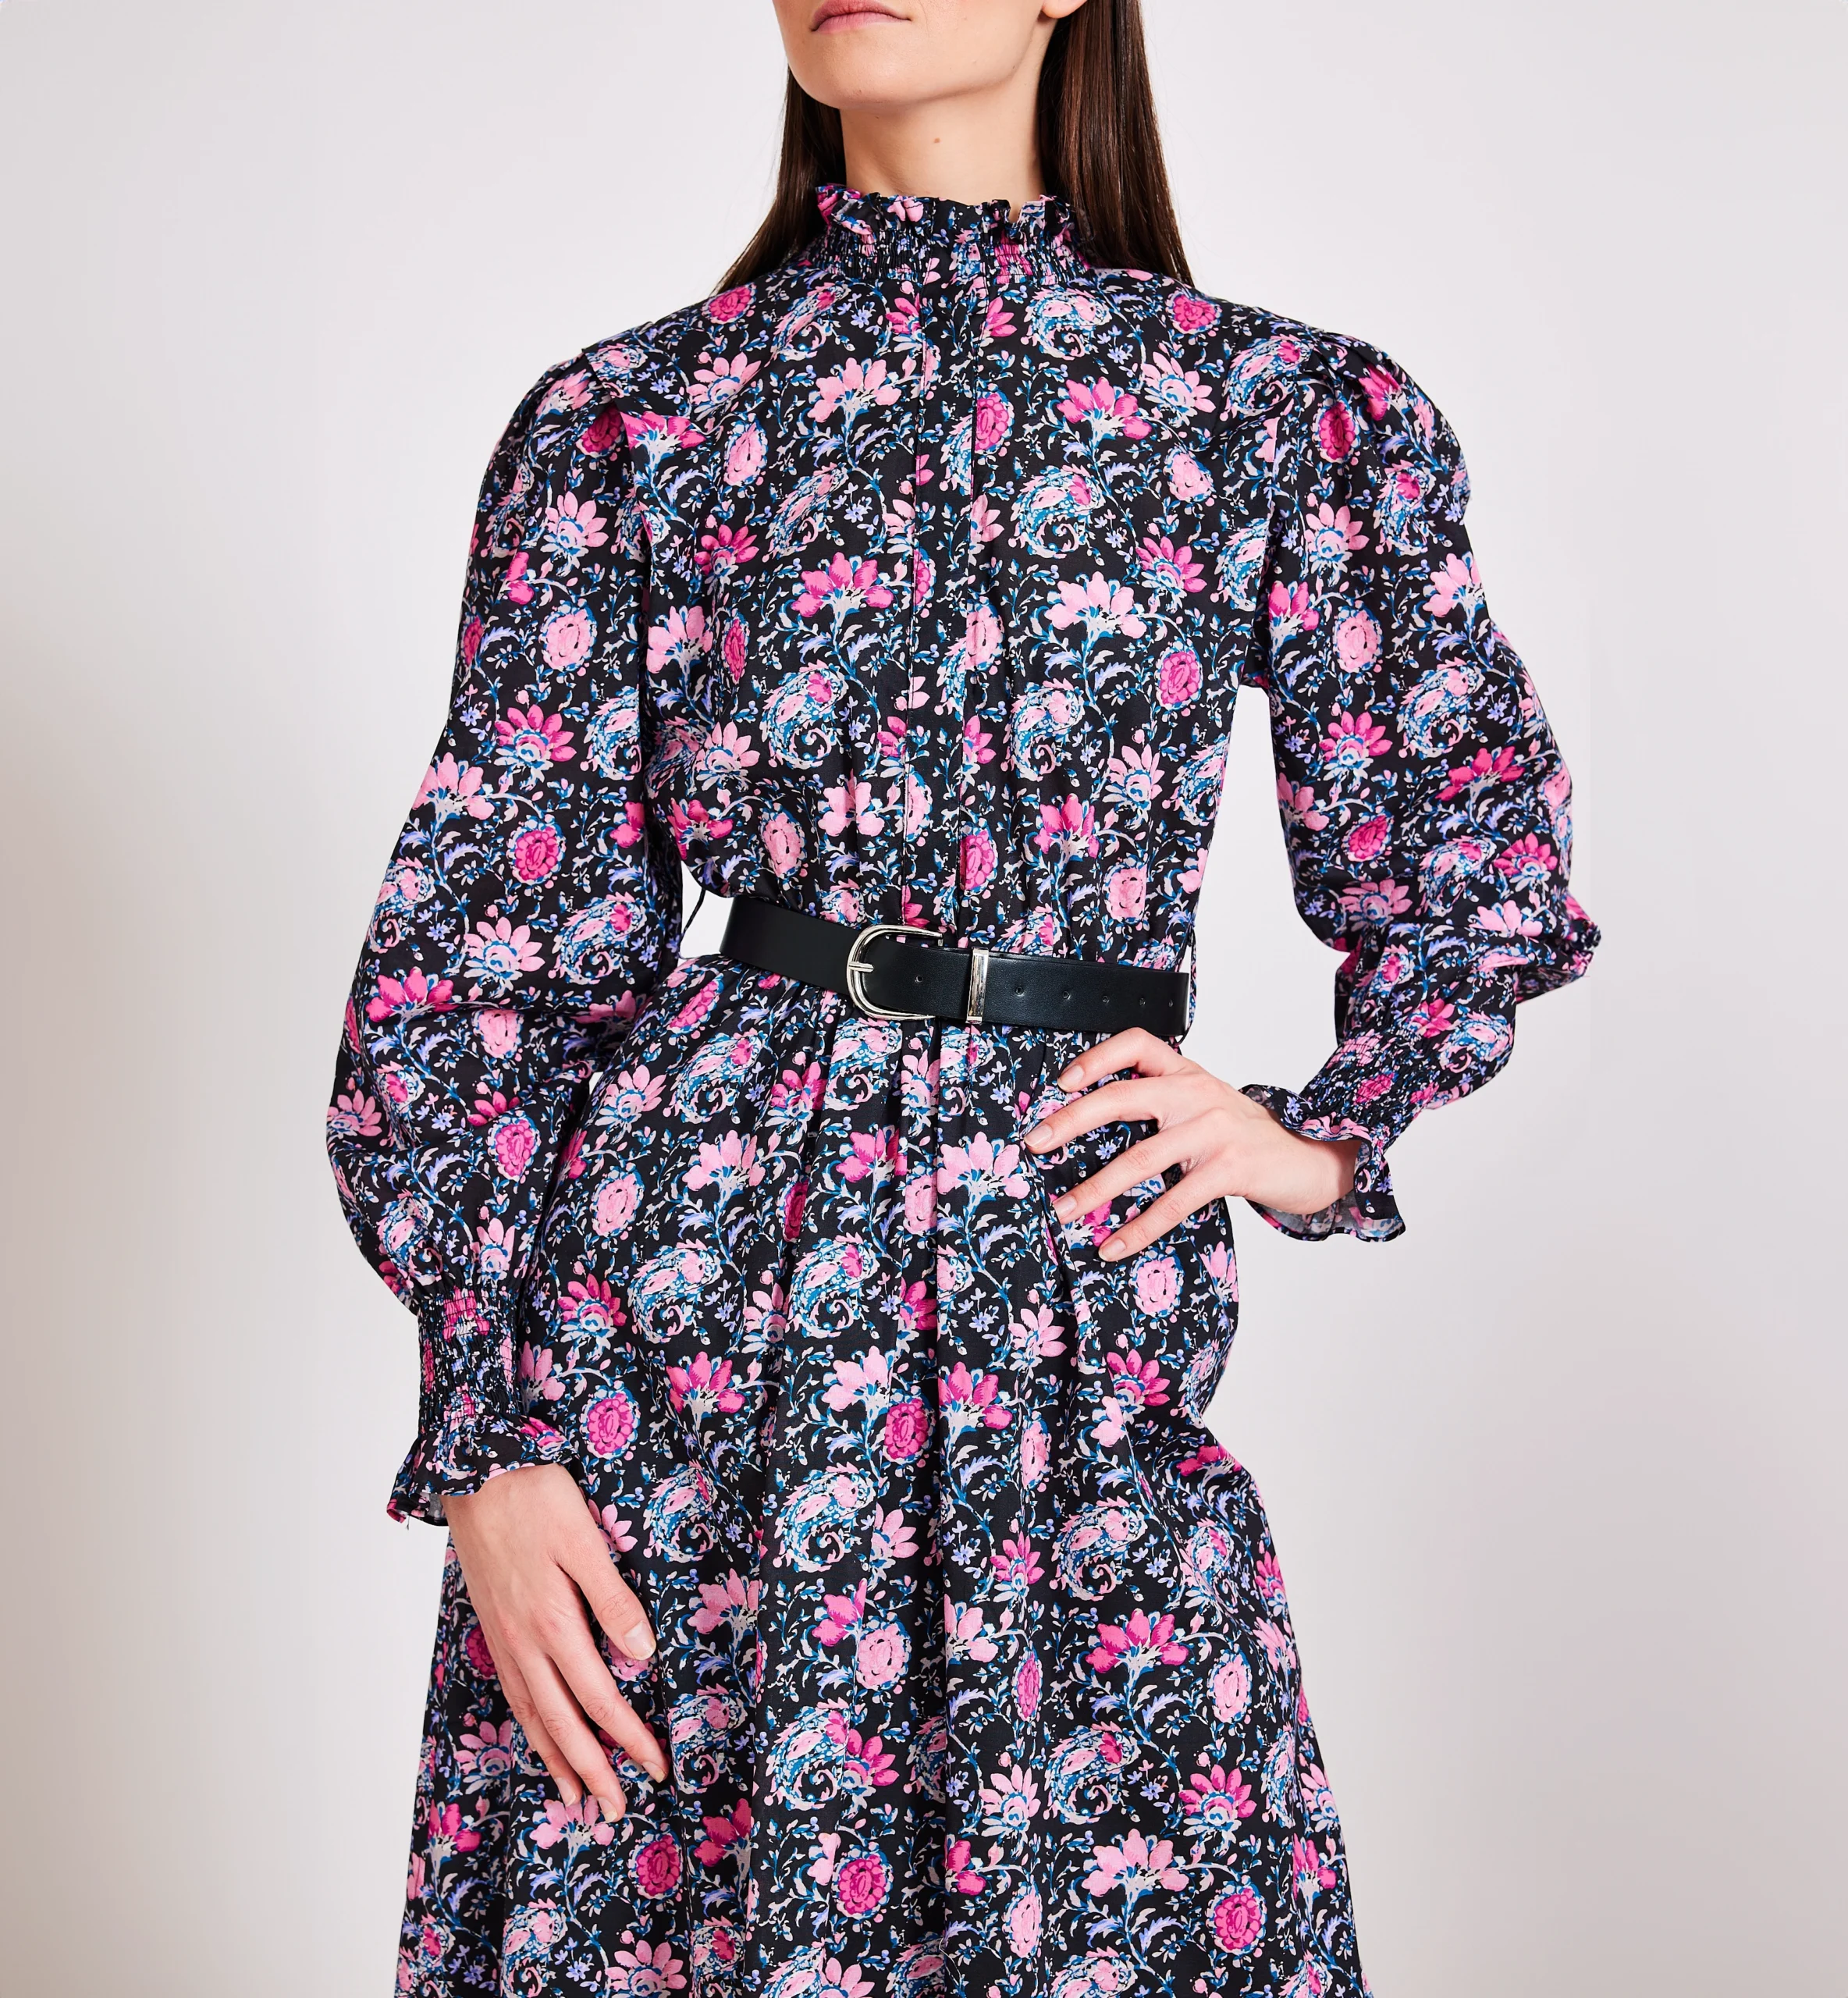 Floral print cotton dress, black&pink